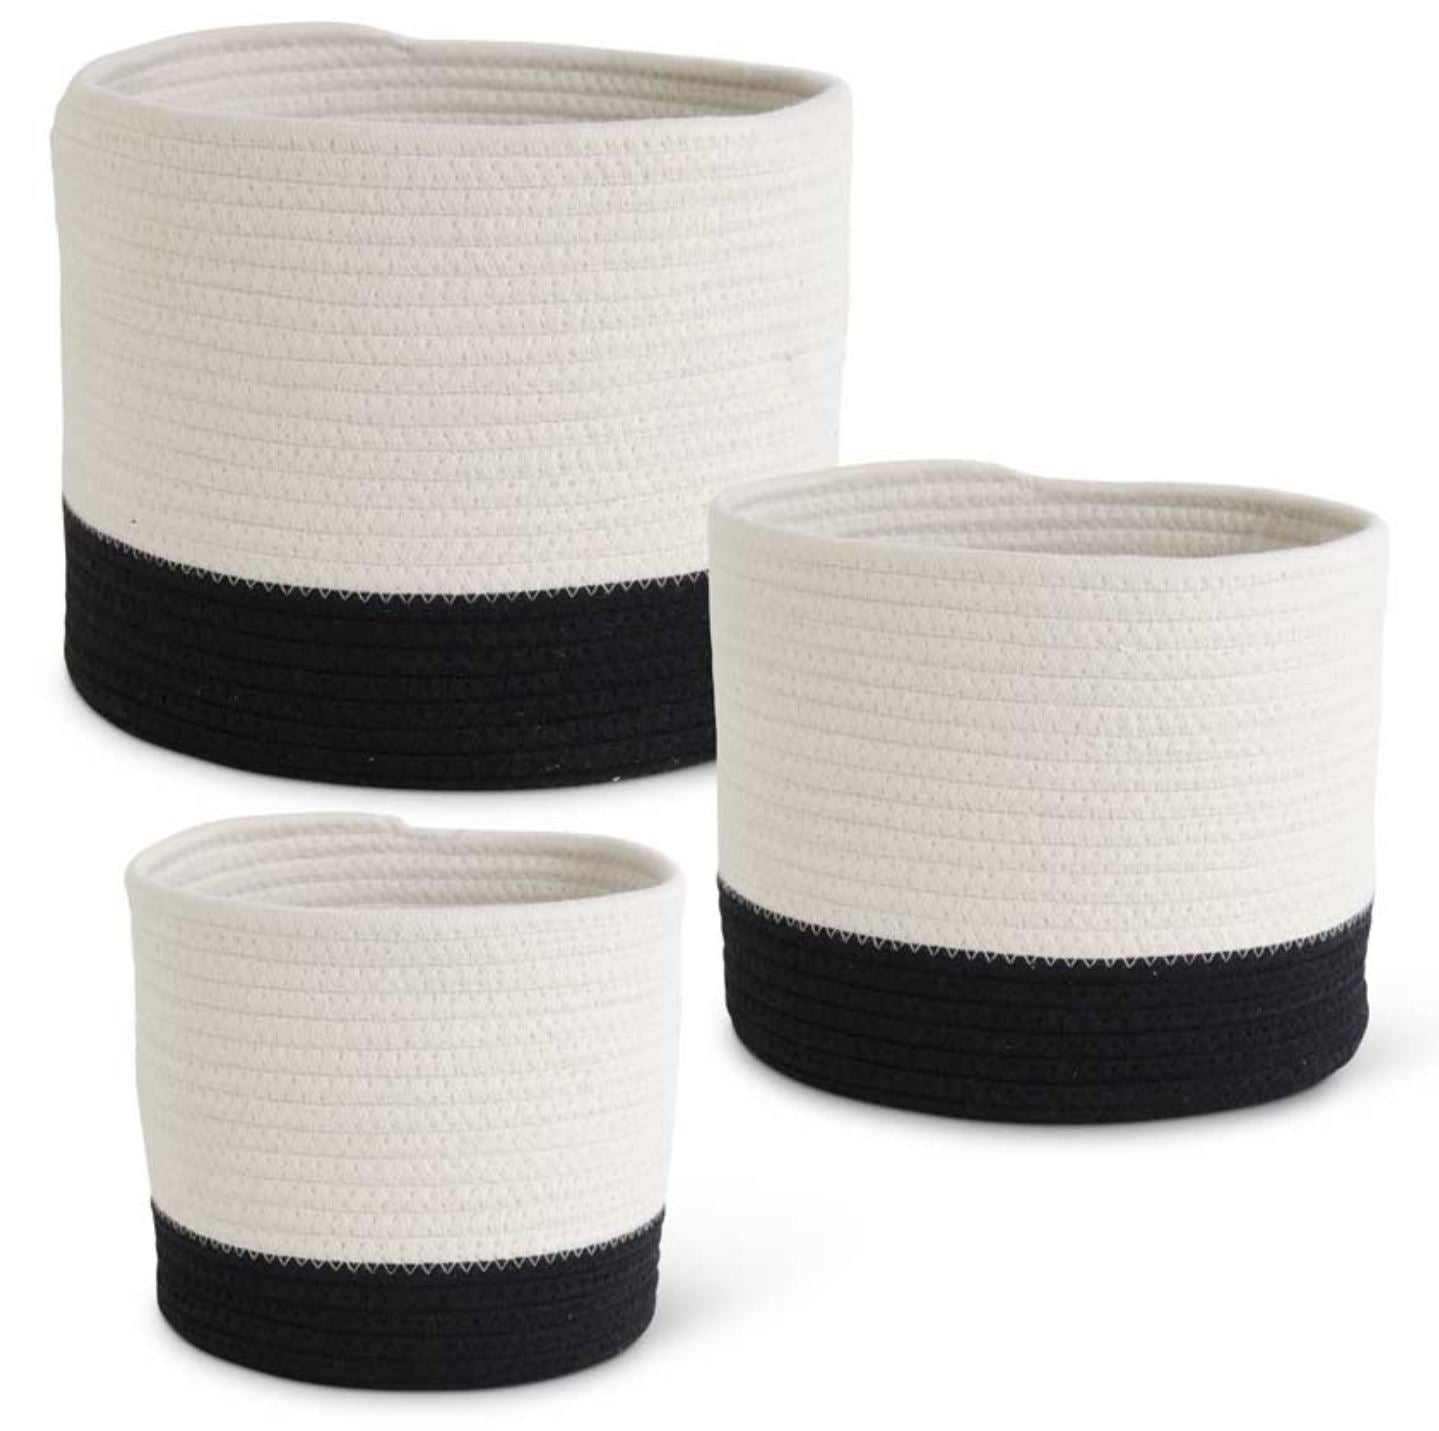 Black & White Rope Basket - Round